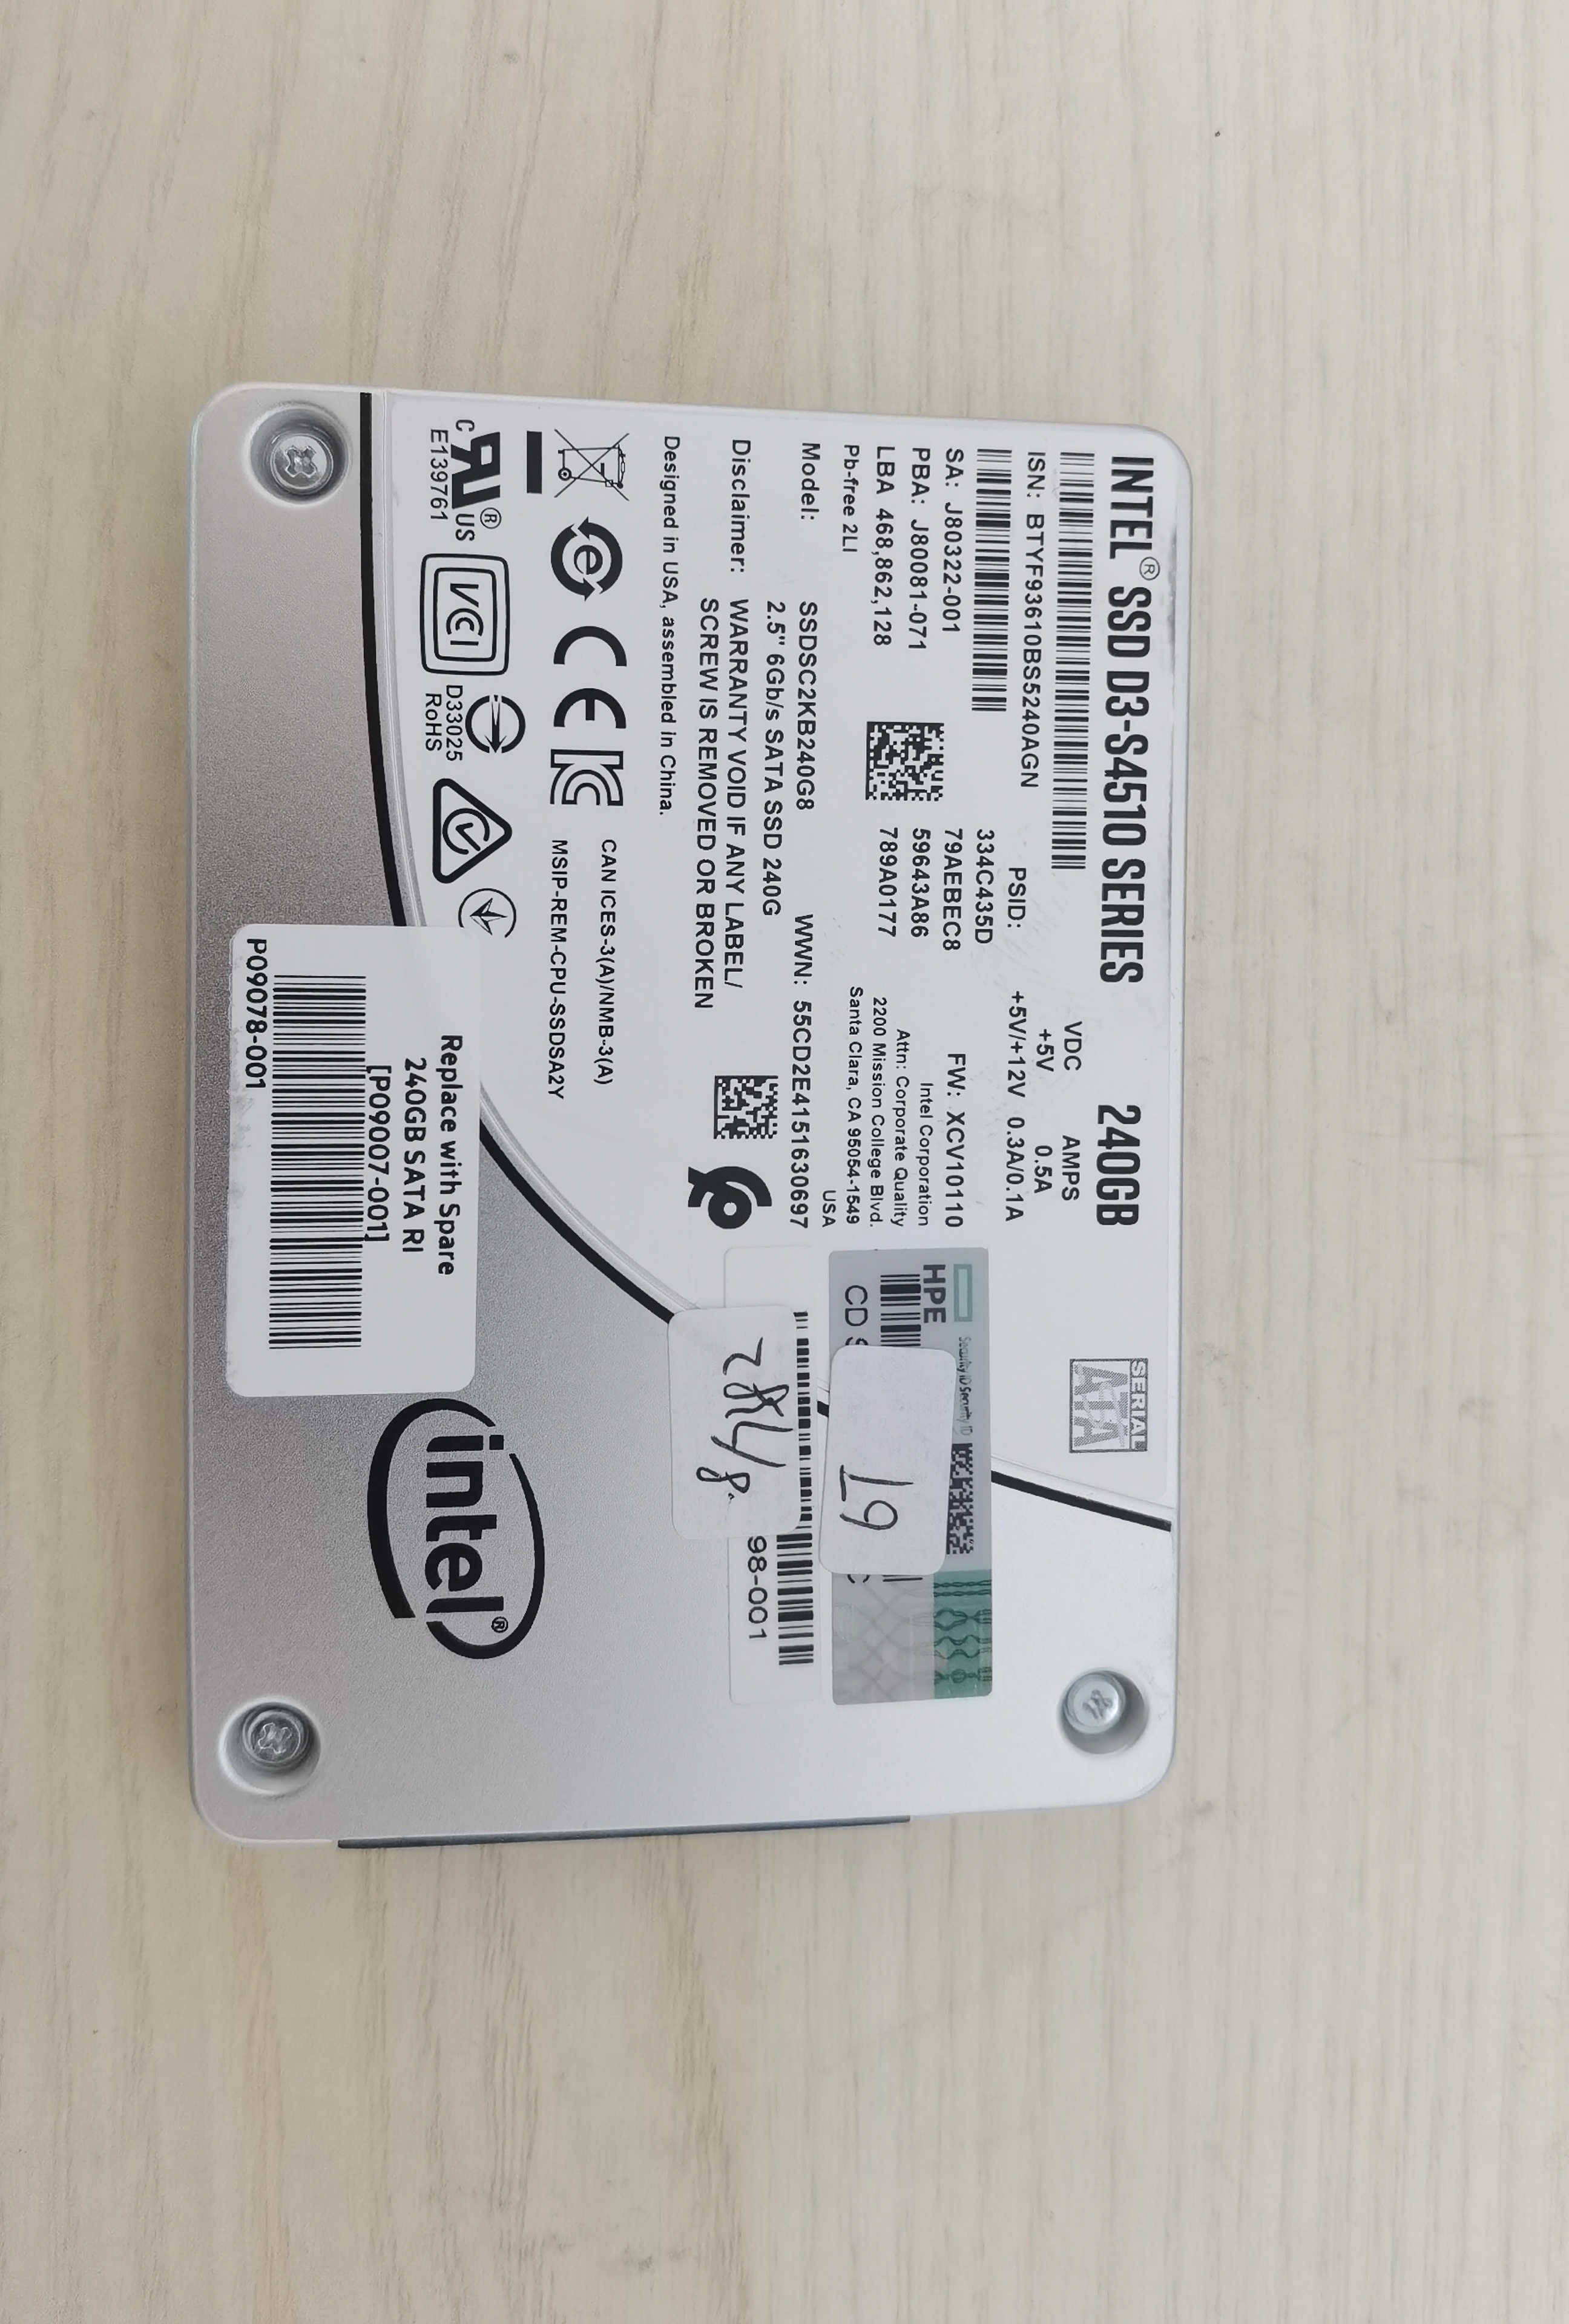 Intel/英特尔 S4500 960G 480G 240G S4600  240G 企业级固态硬盘